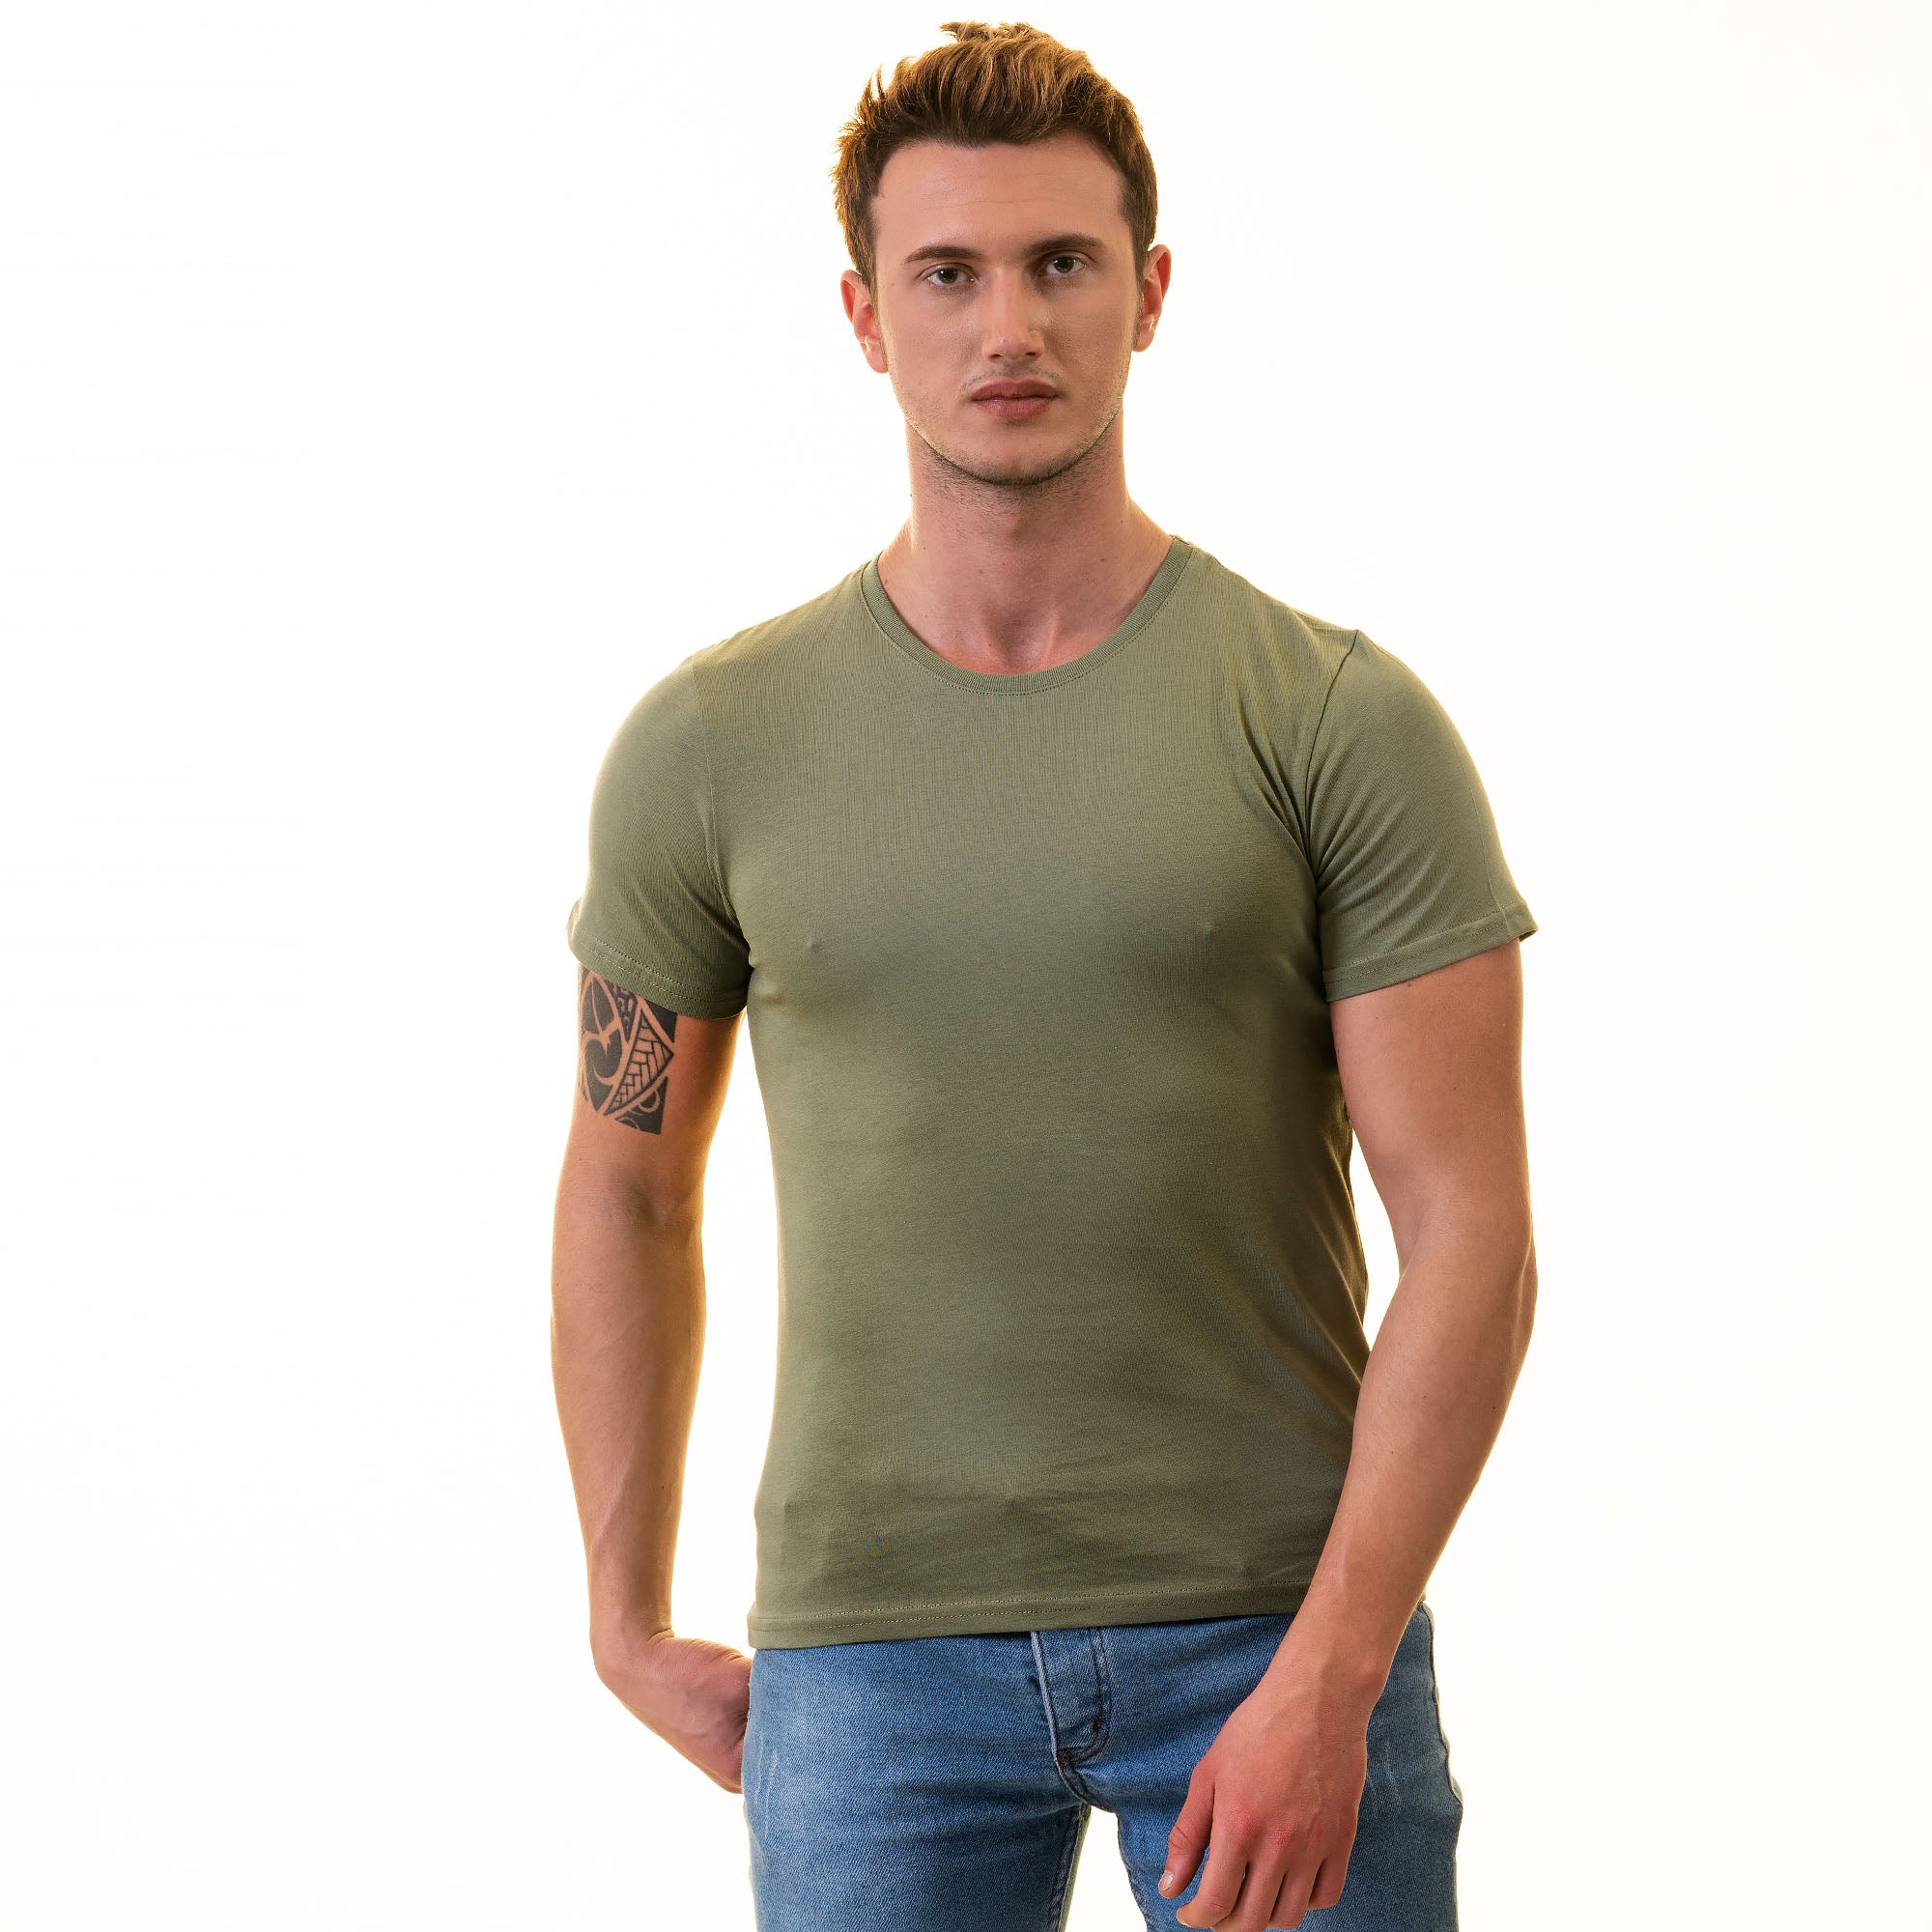 Amedeo Sho & Quality Designed - Premium Made Khaki European Crew – T-Shirt Neck Exclusive